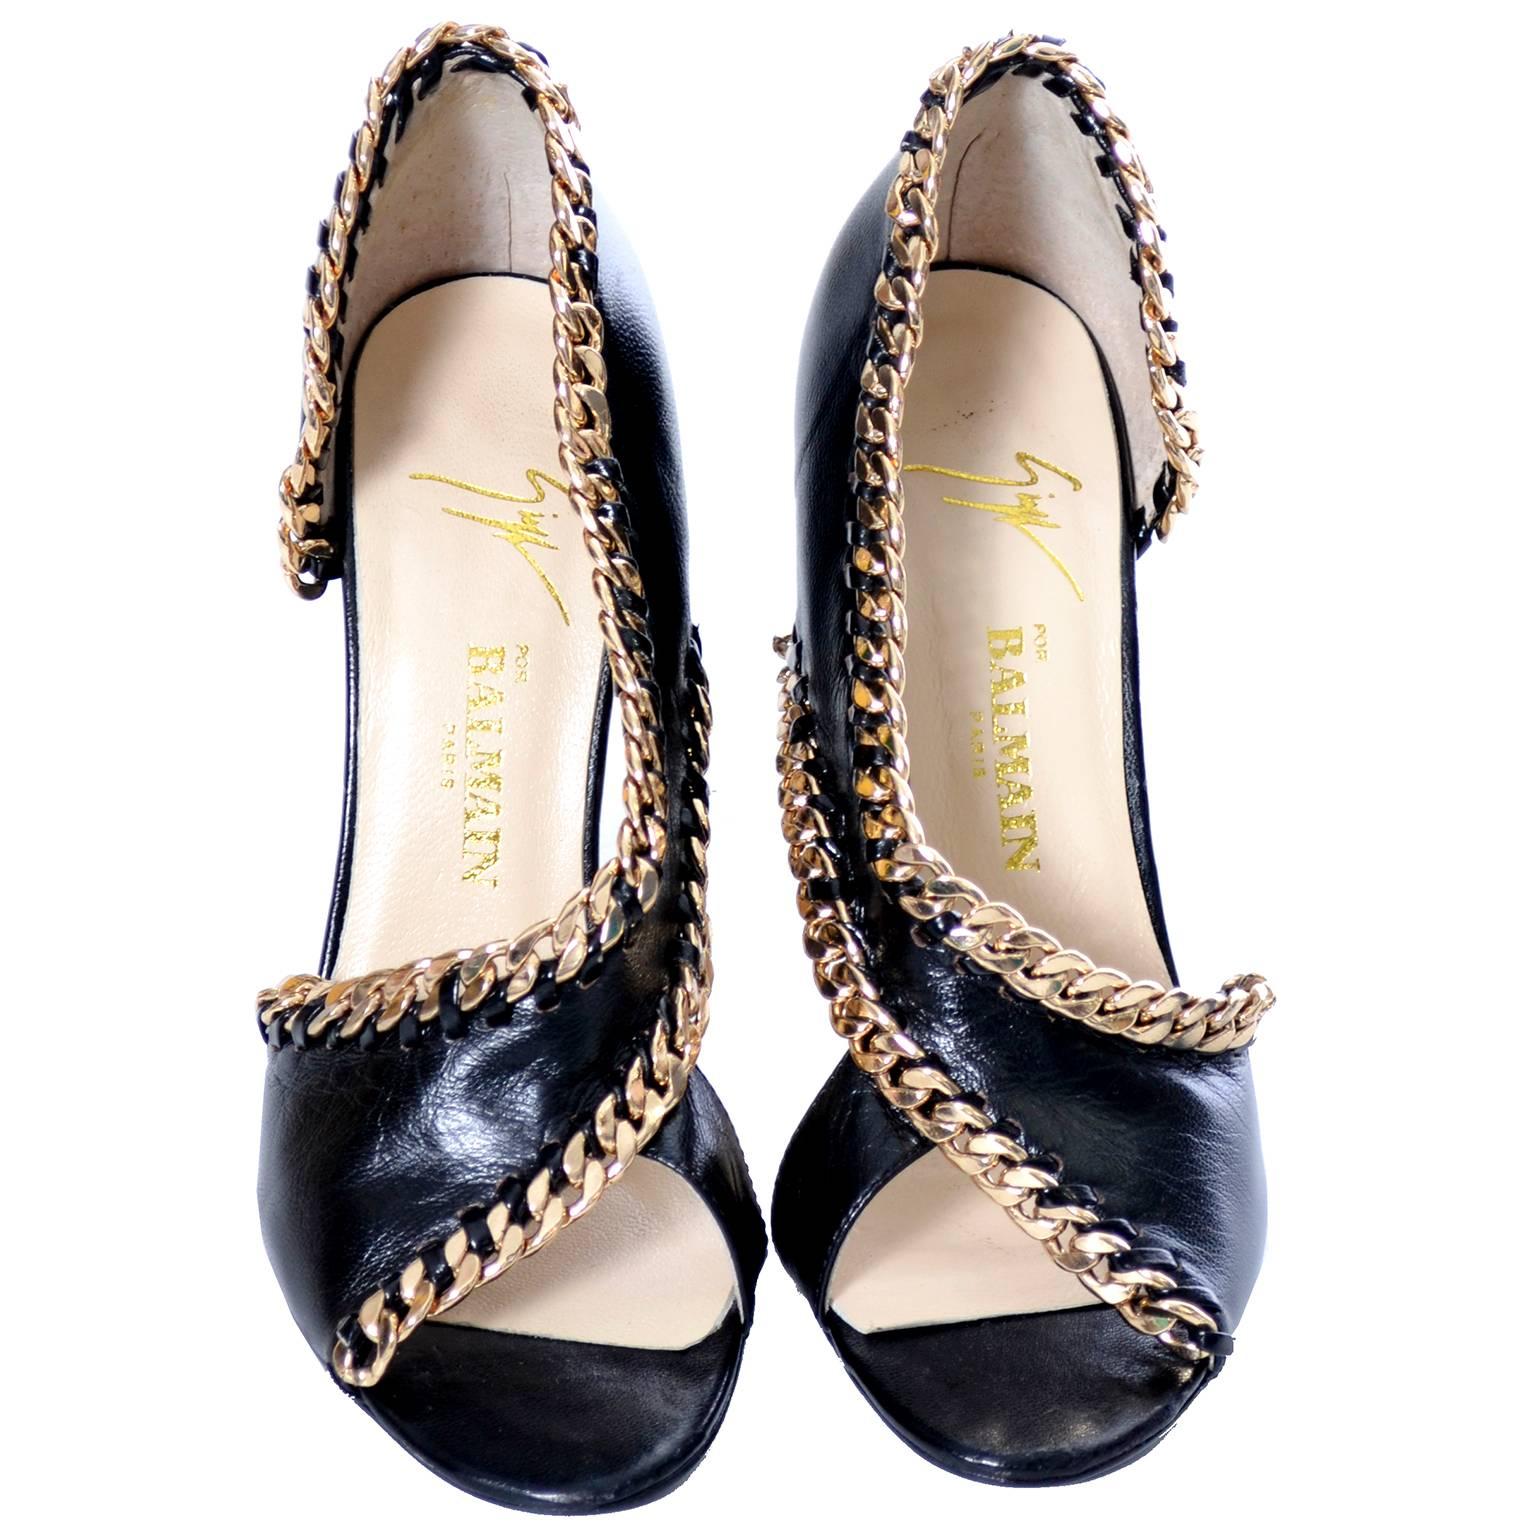 Giuseppe Zanotti for Balmain Paris Shoes Black Leather Heels Chain Detail 5.5 6 2